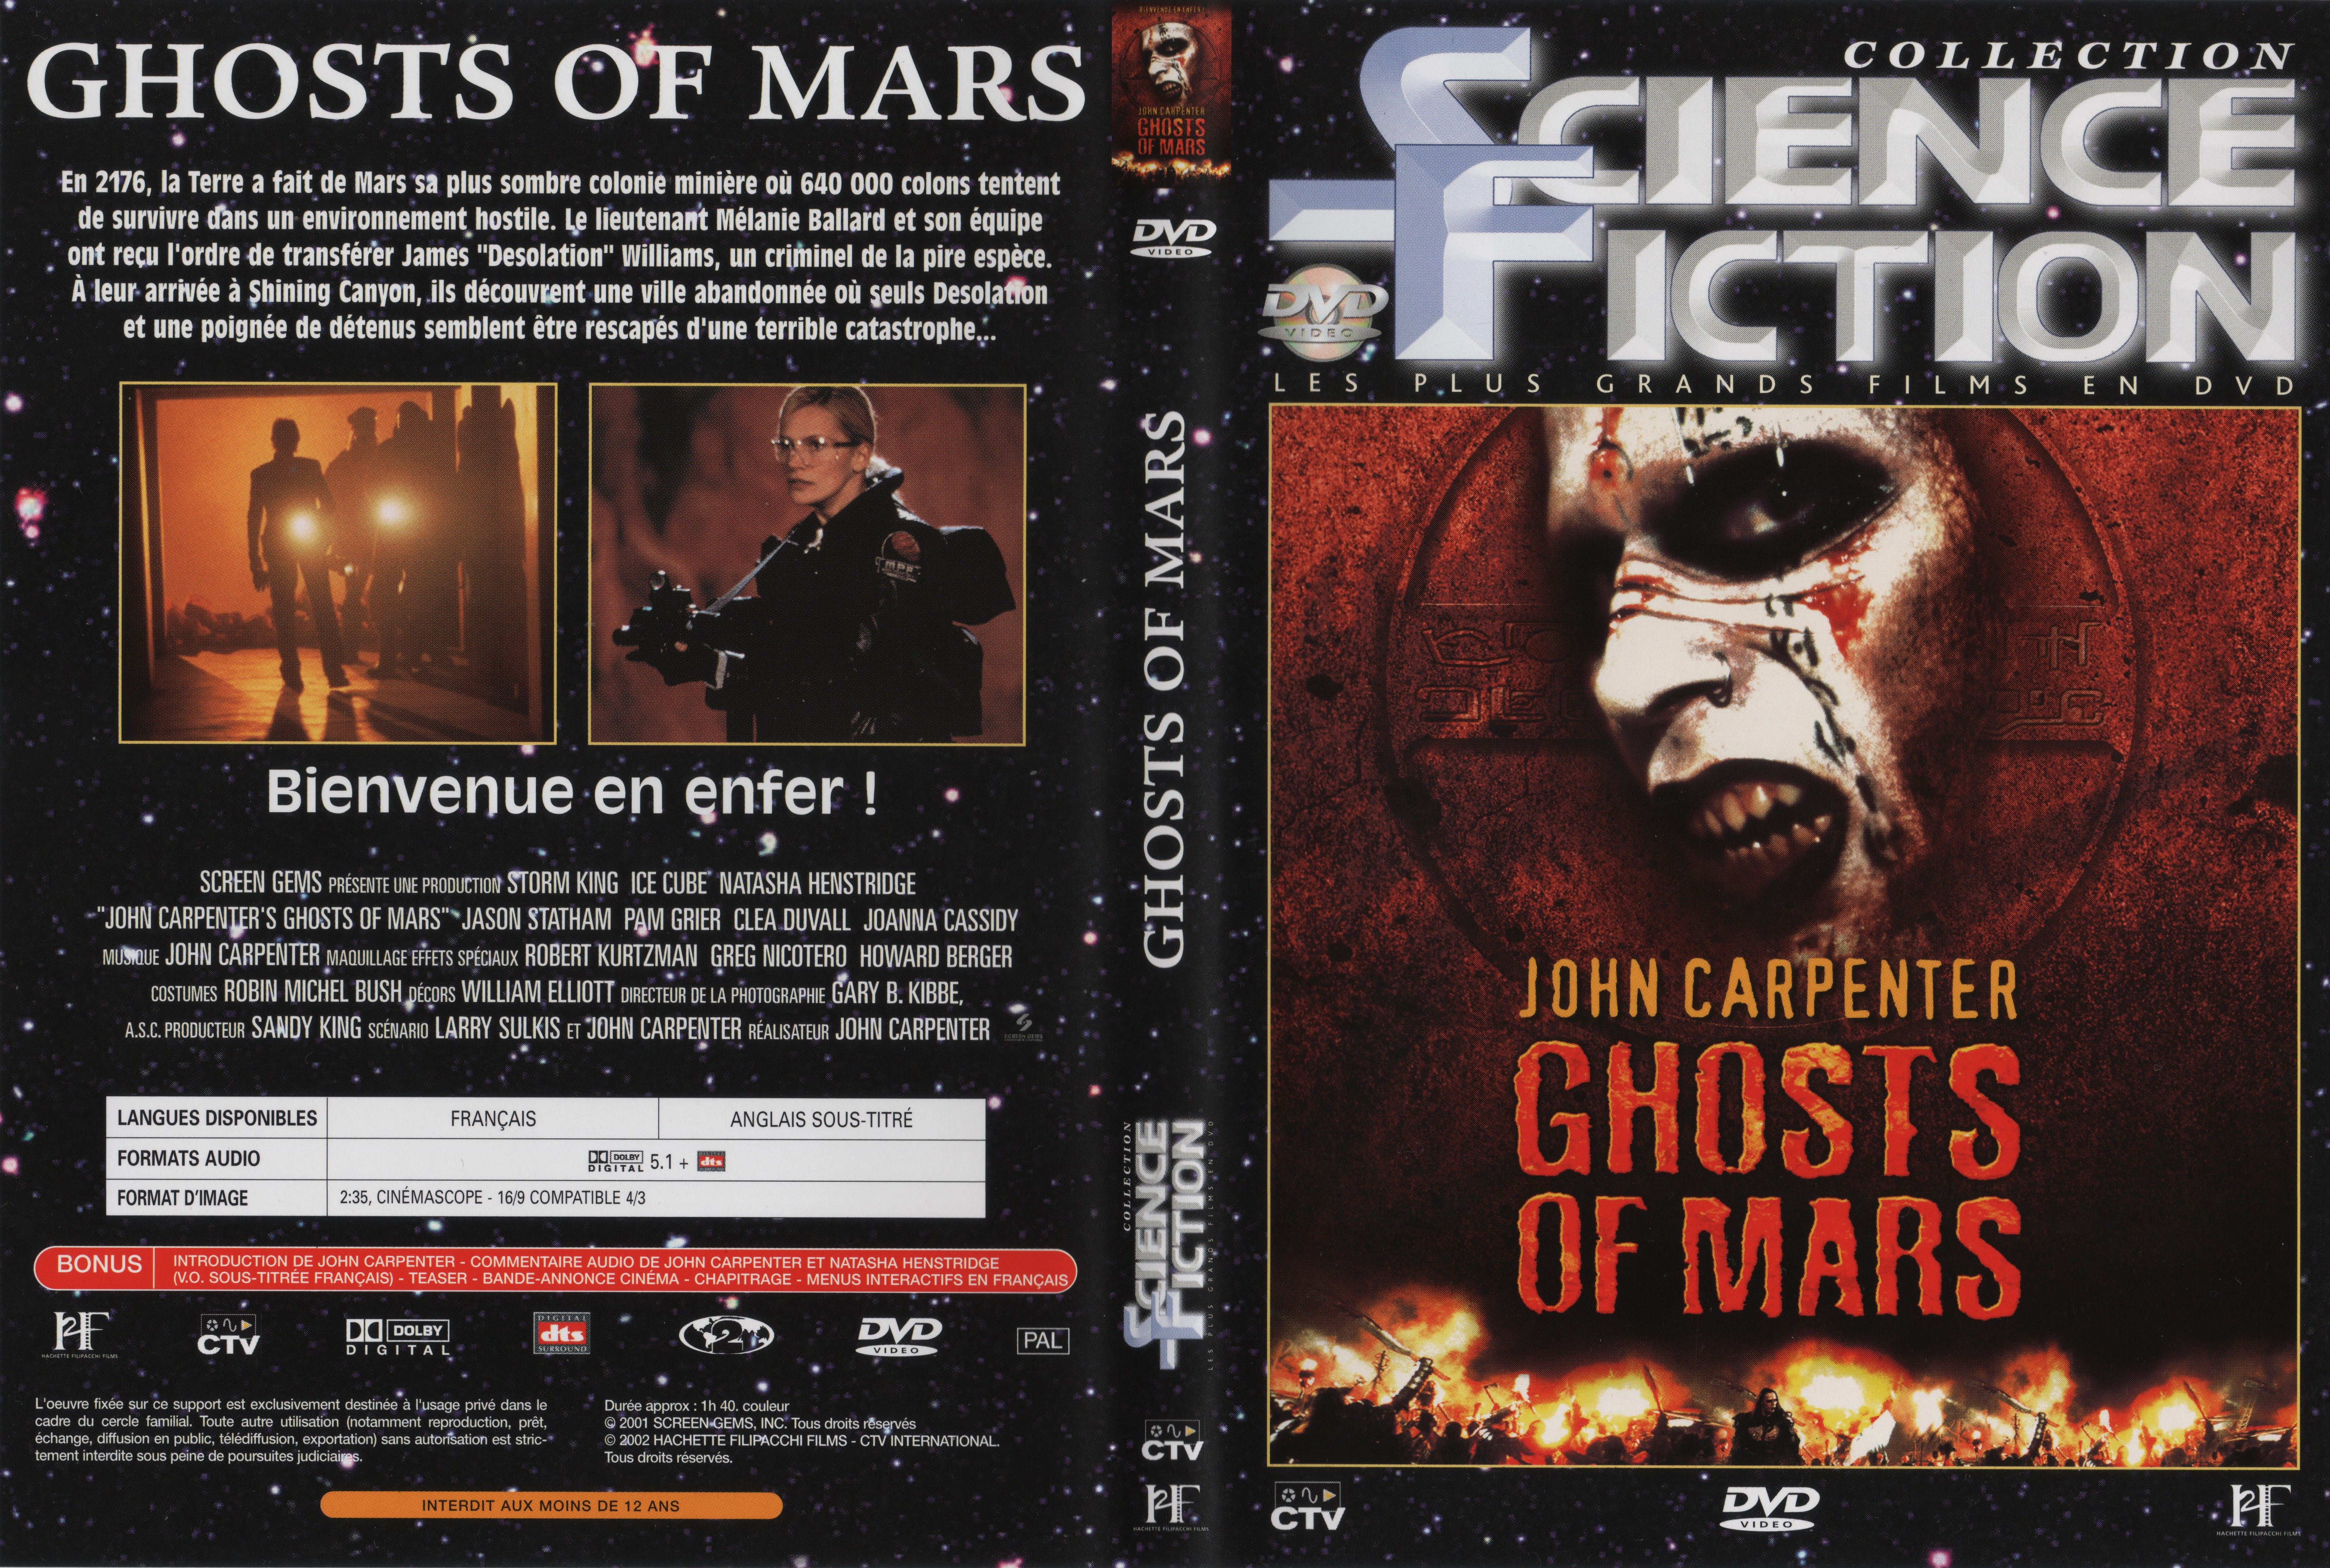 Jaquette DVD Ghosts of Mars v3